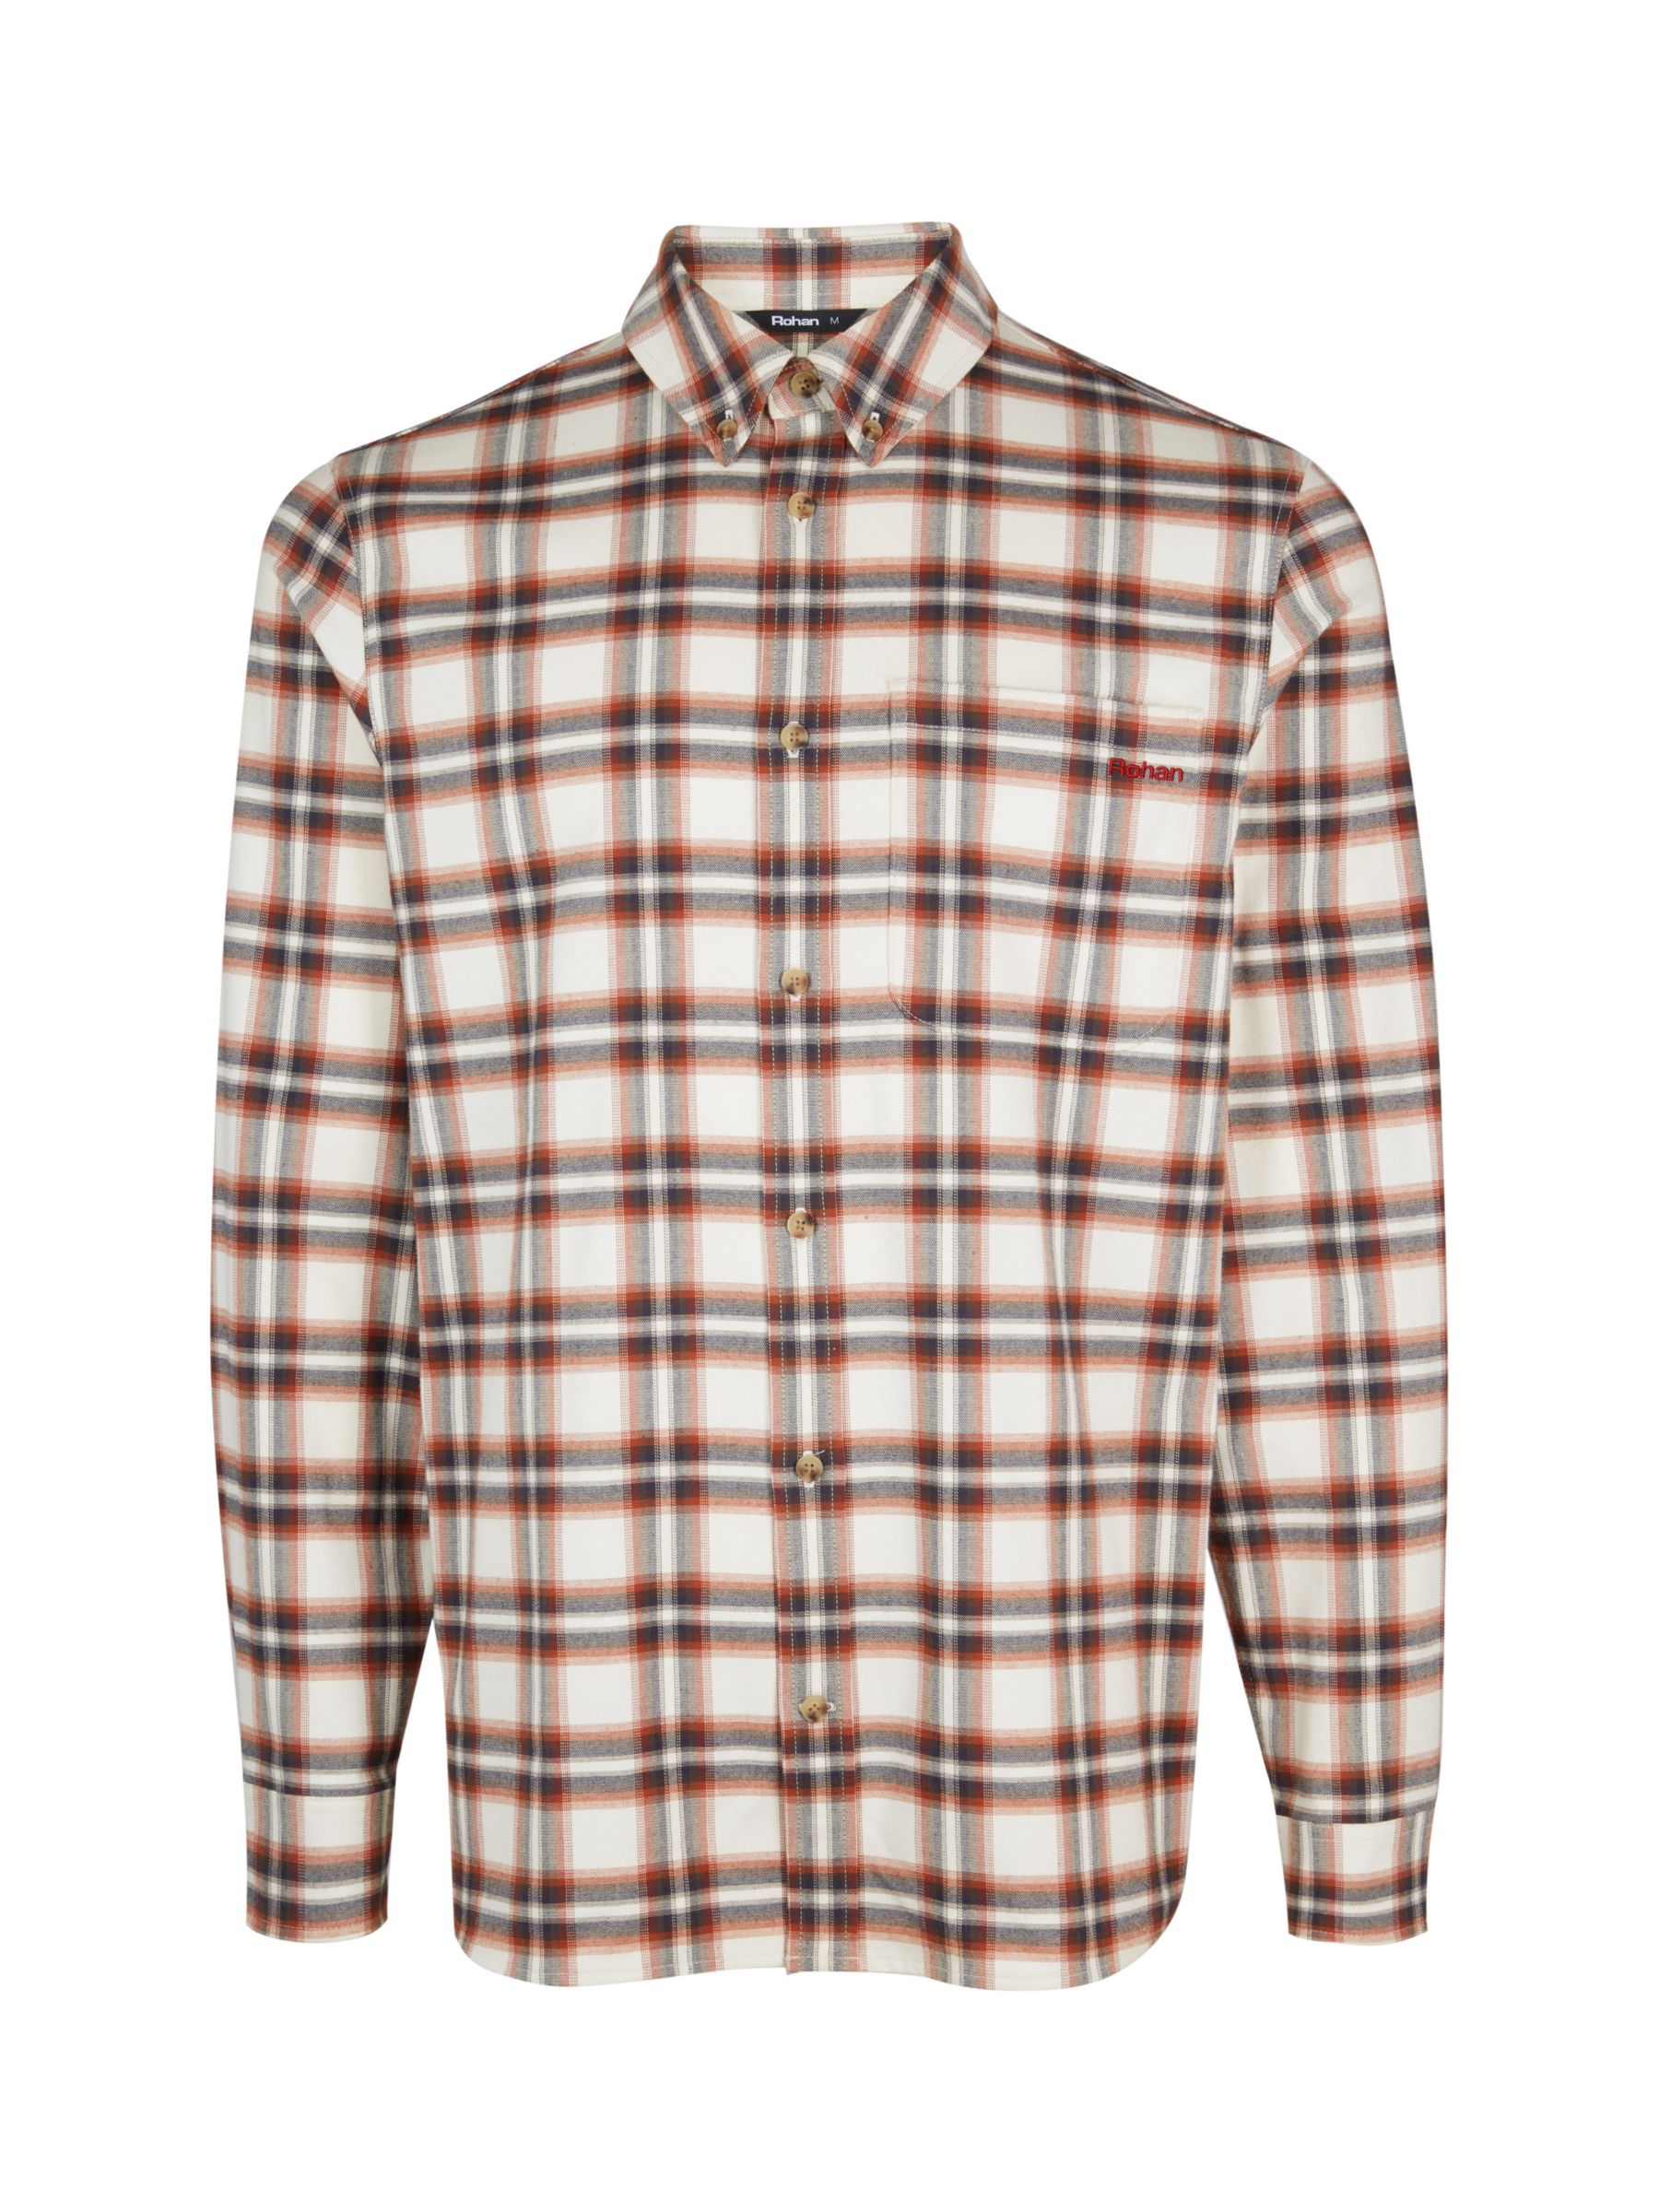 Rohan Dover Long Sleeve Check Shirt, Ecru/Red, S